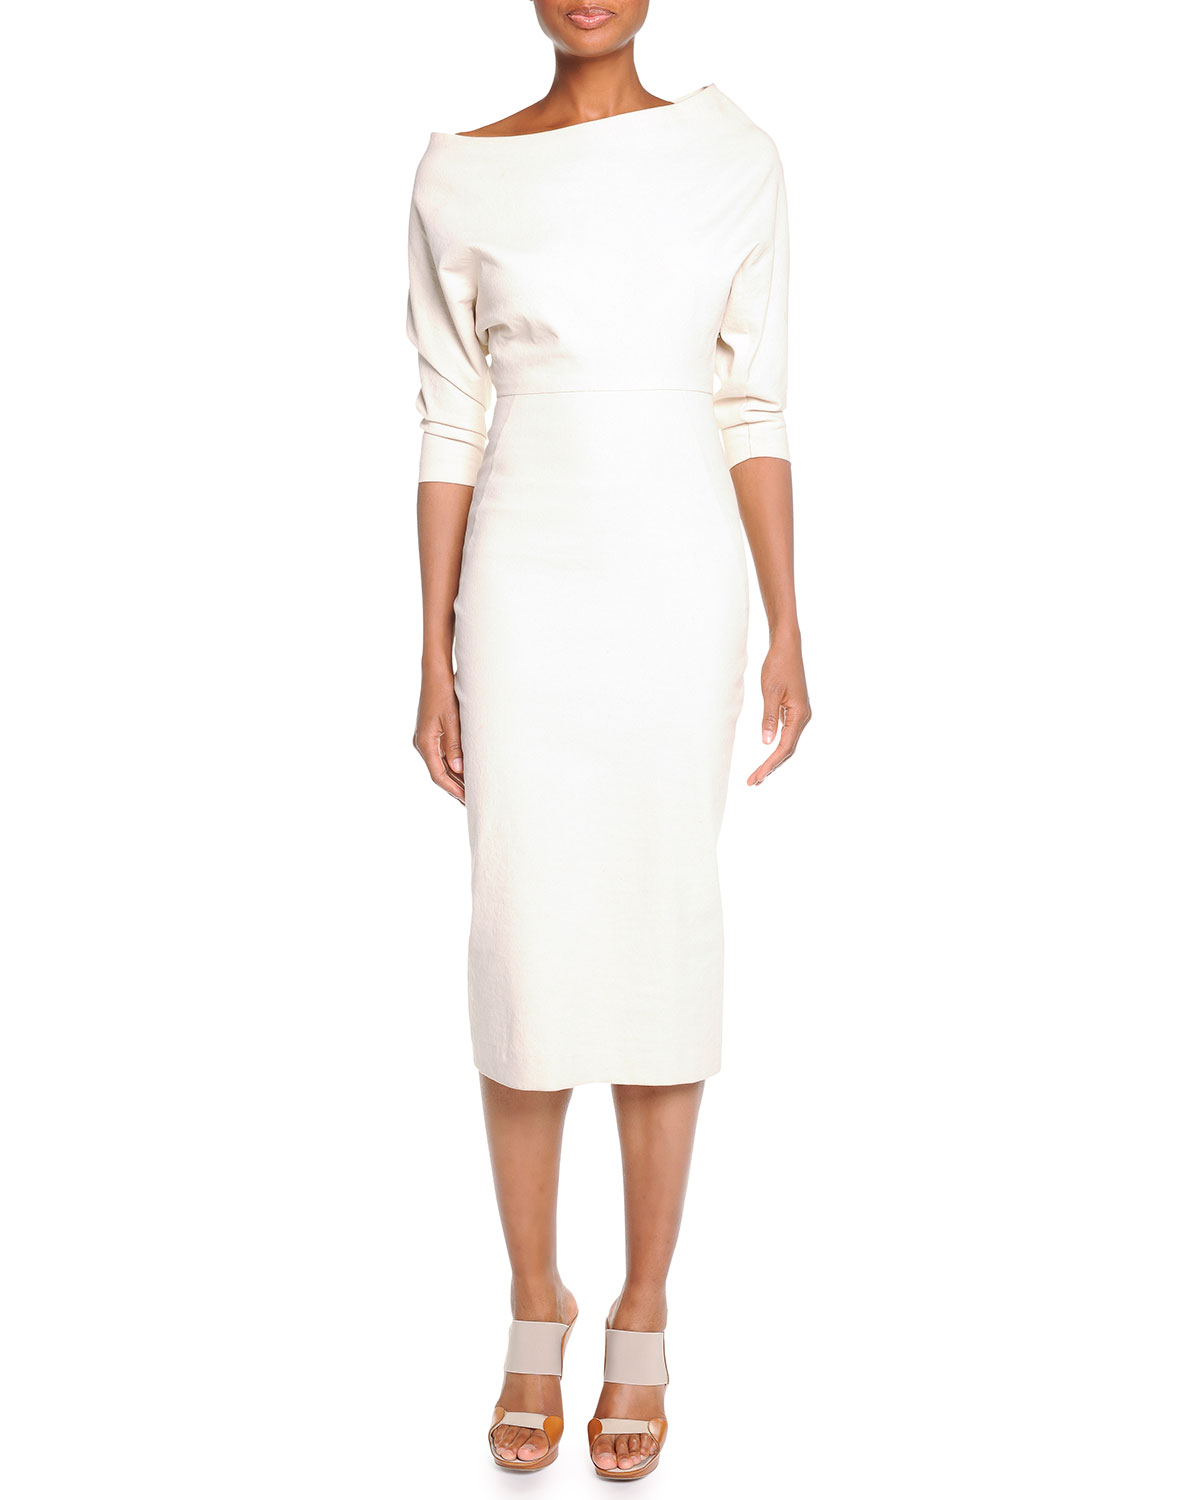 Lyst - Donna Karan Belted Elbow-Sleeve Midi Dress in White